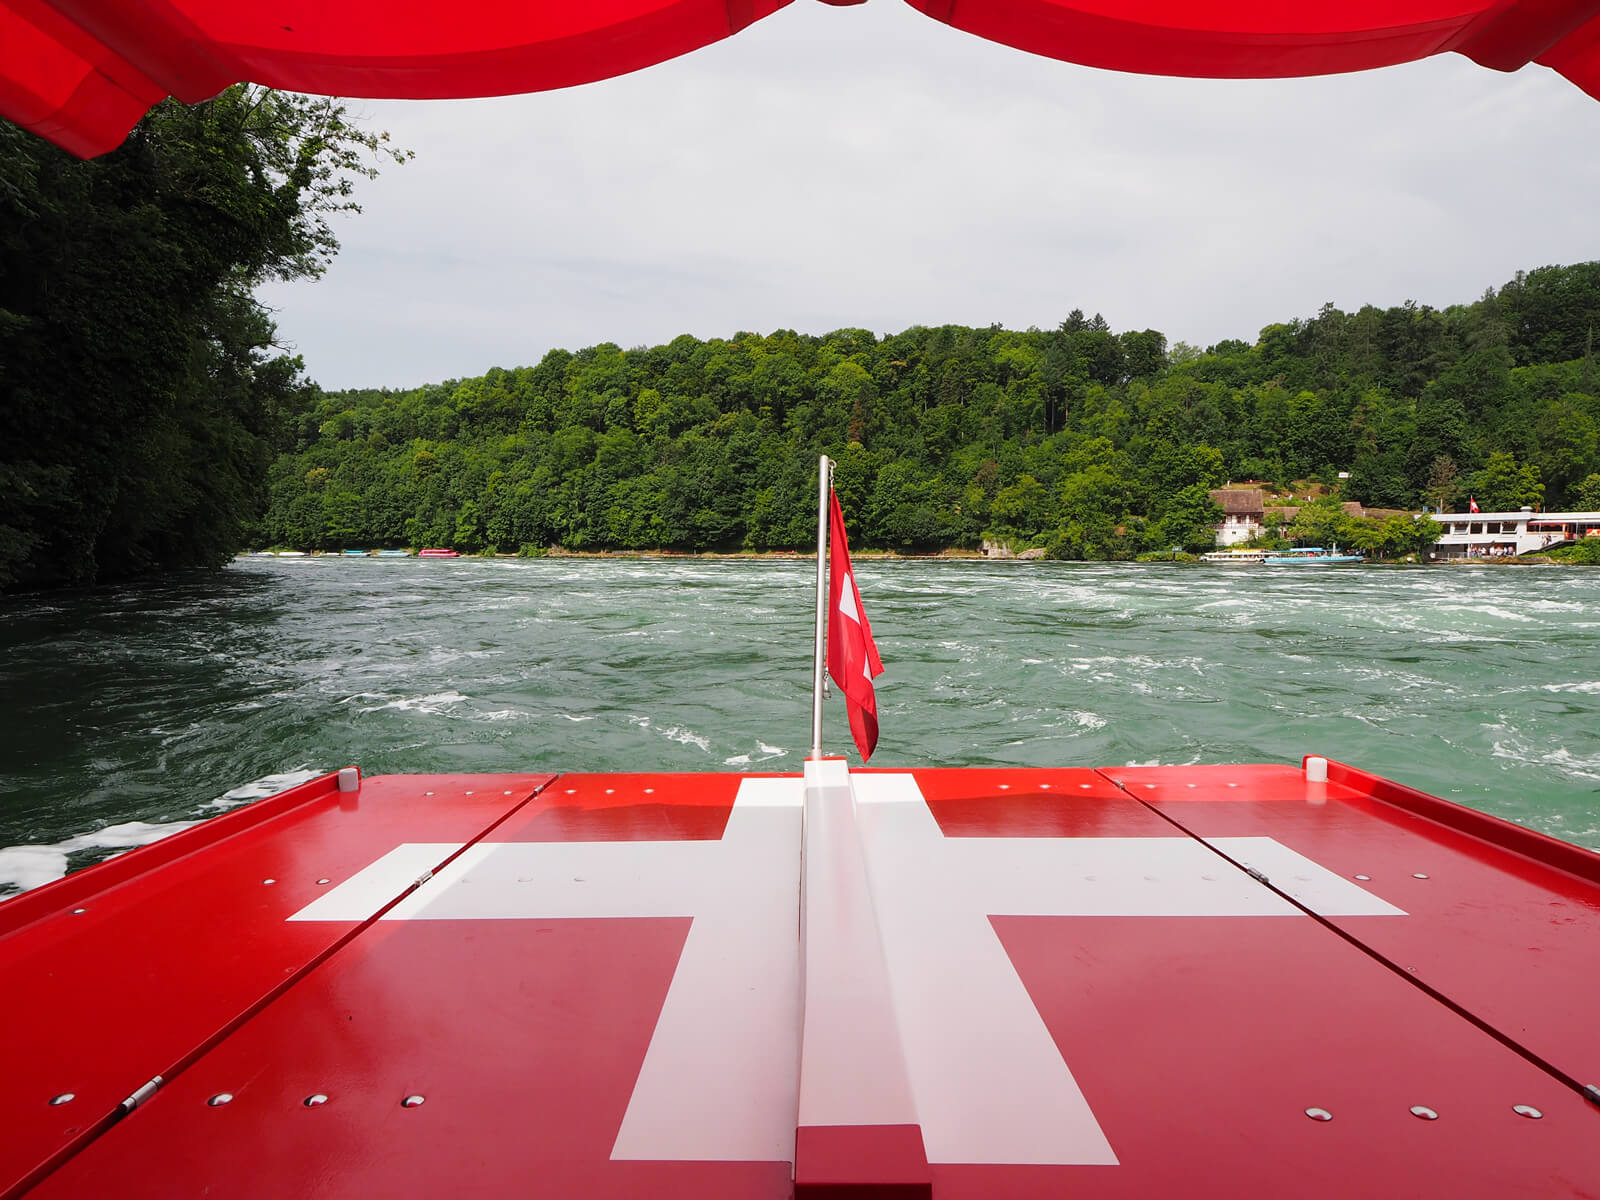 Rhine Falls Boat - Is Swiss And Switzerland The Same?